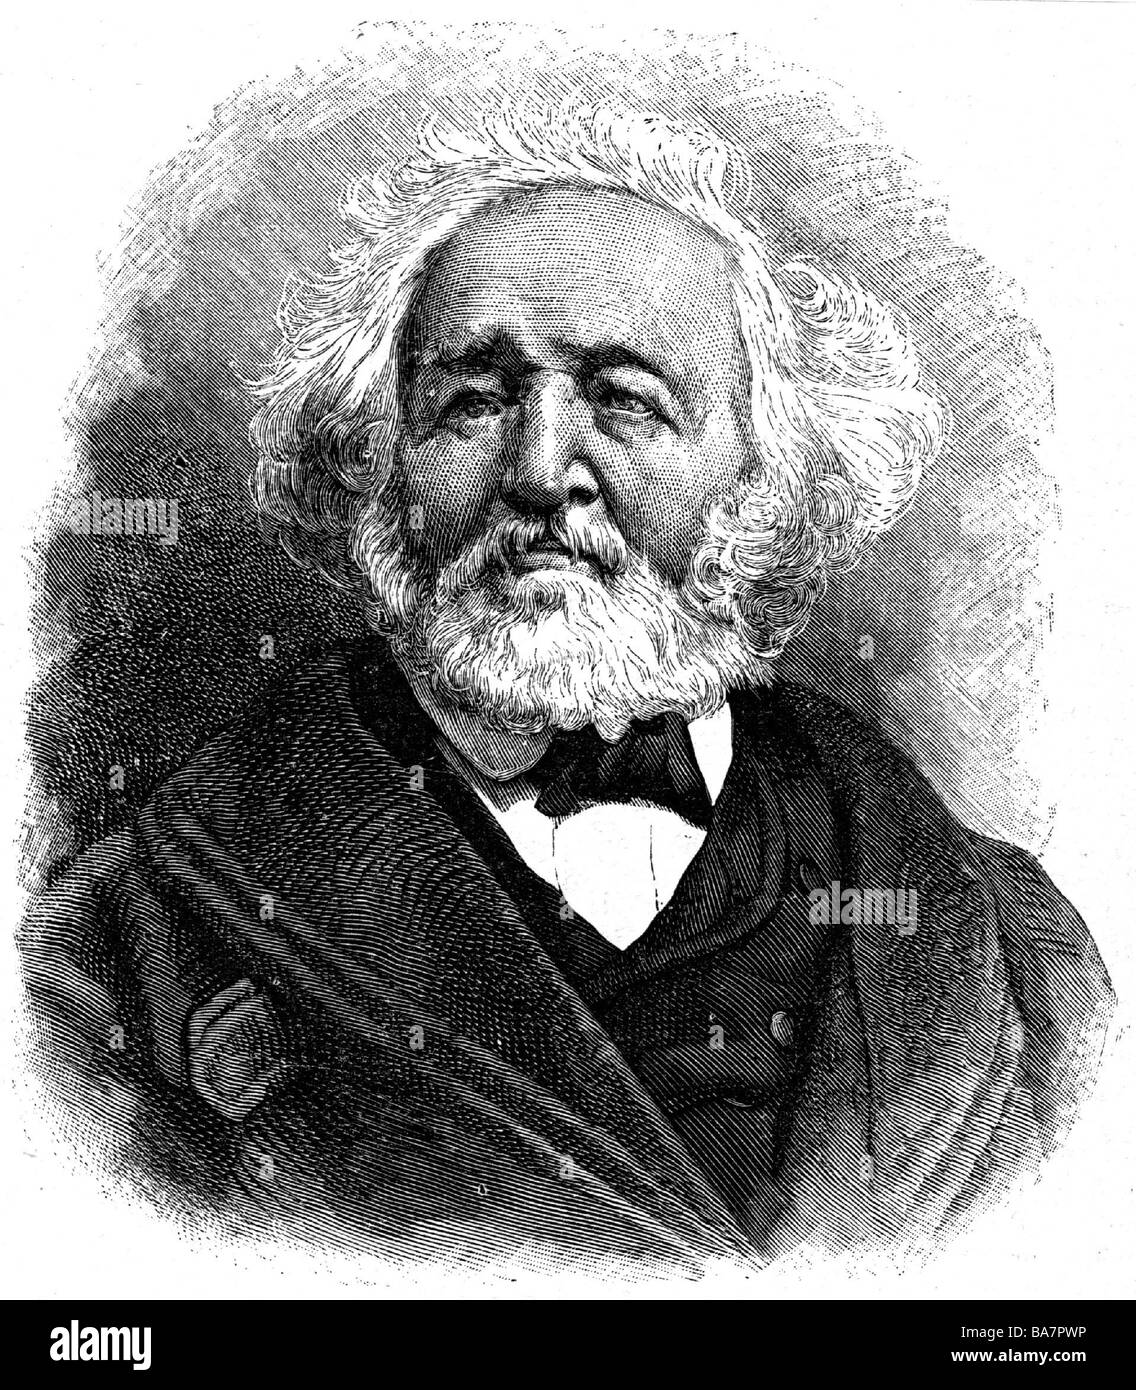 Ranke, Leopold von, 21.12.1795 - 23.5.1886, German historian, portrait, wood engraving, 19th century, Stock Photo